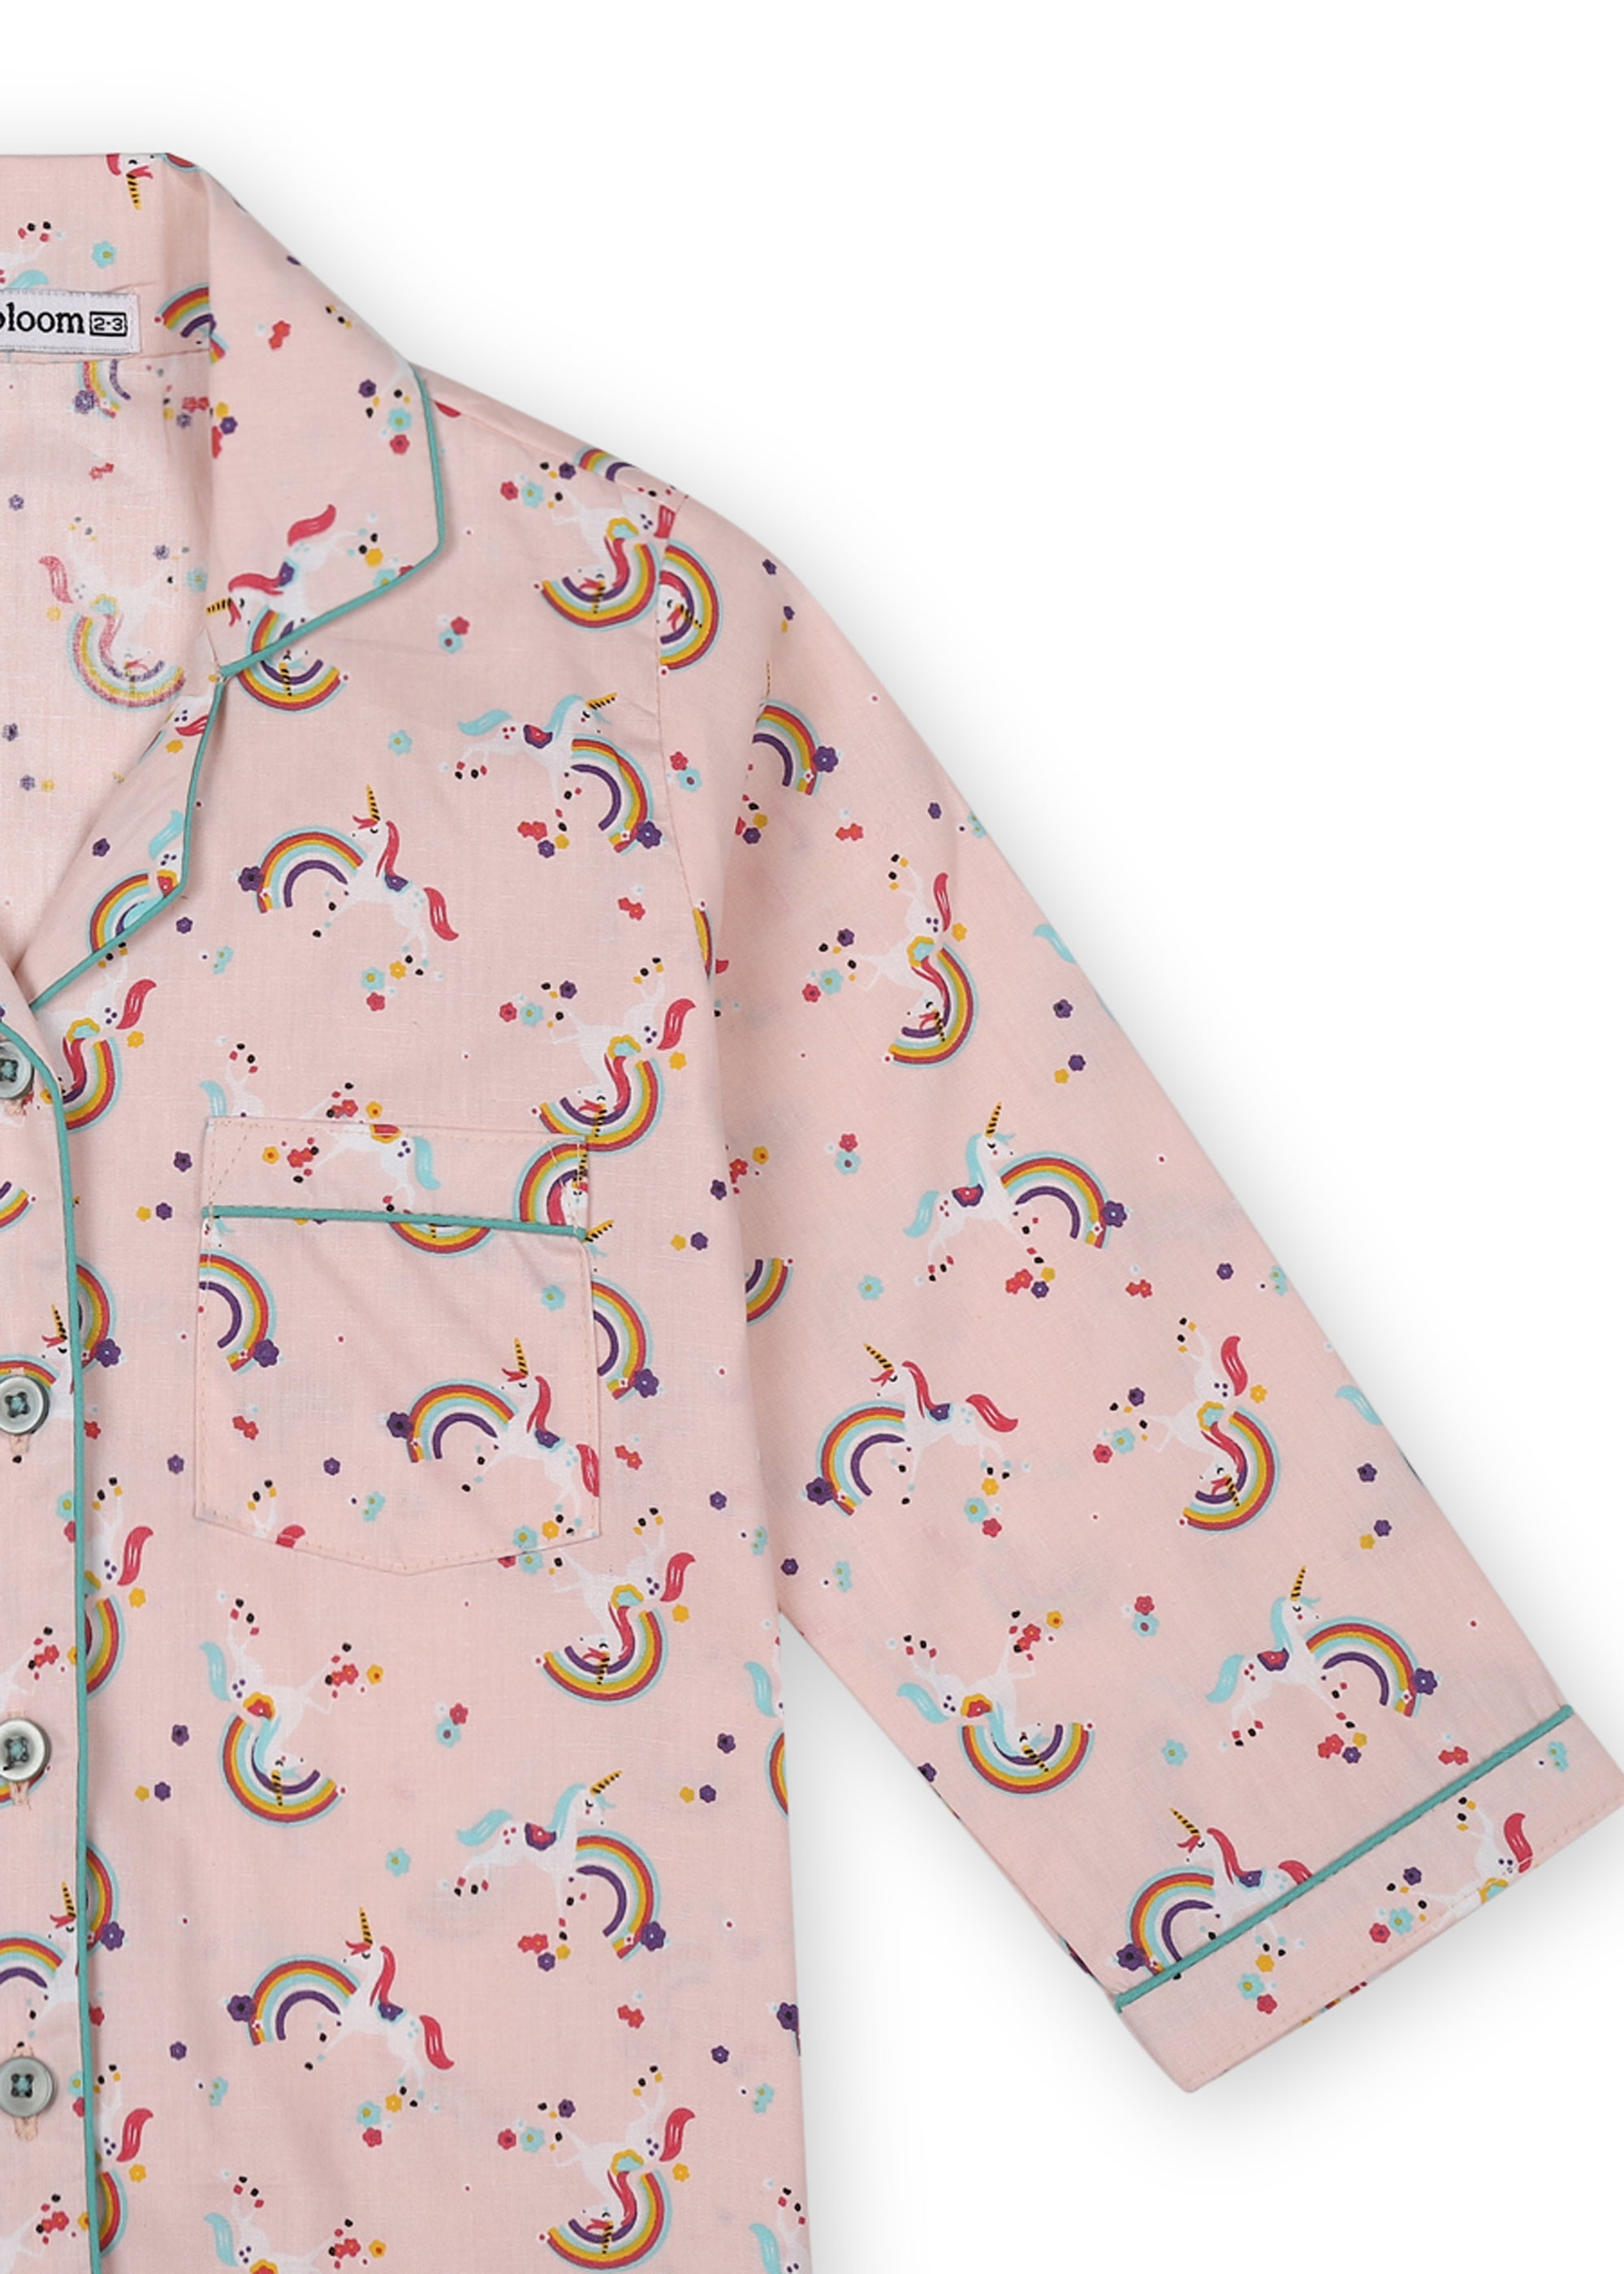 Unicorn and Rainbow Print Long Sleeve Kid's Night Suit - Shopbloom